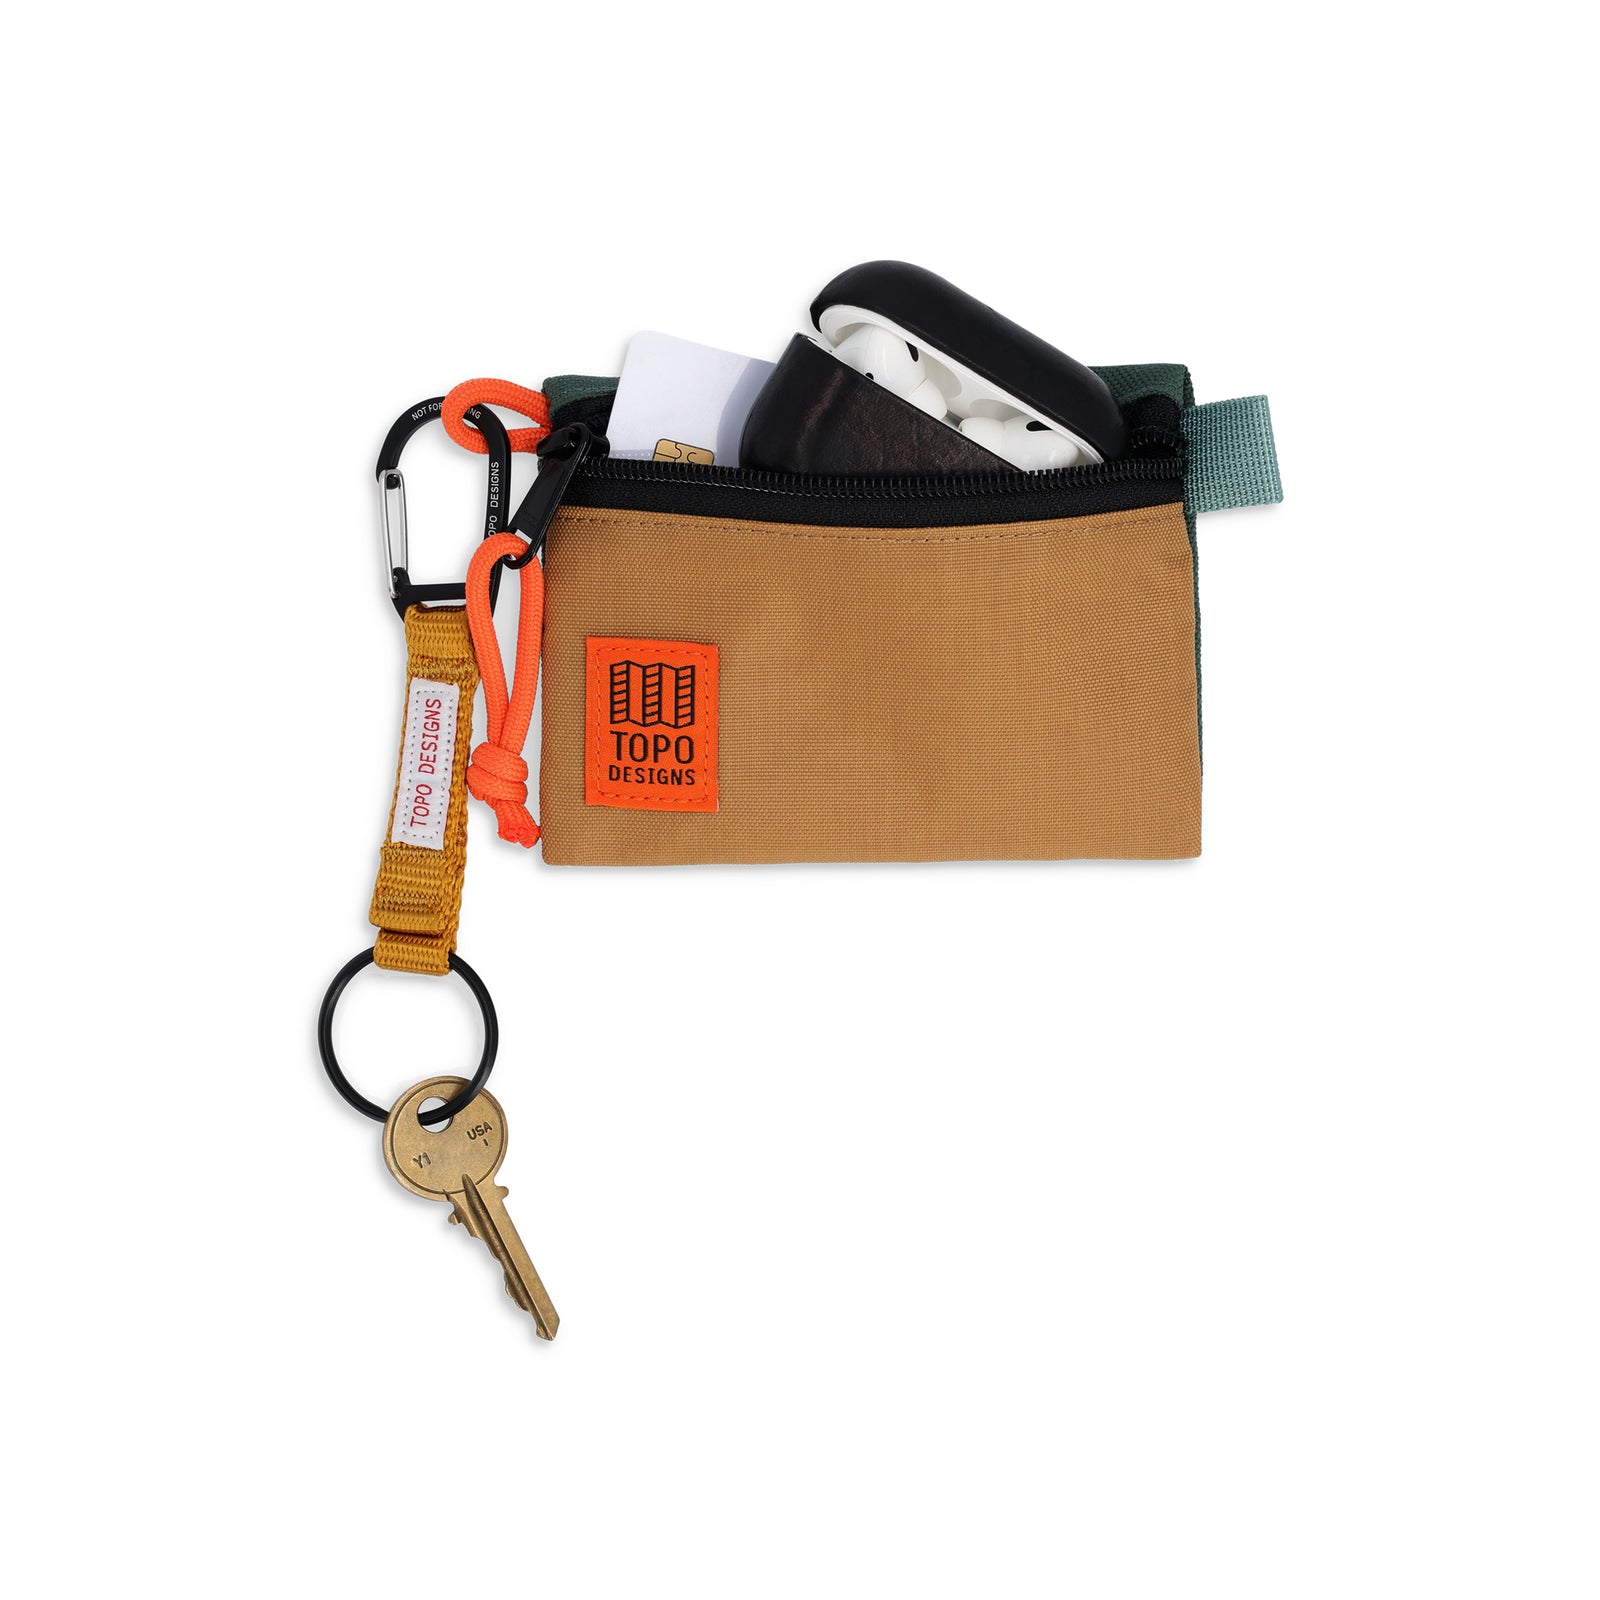 General shot Topo Designs Accessory Bag "Micro" in "Khaki / Forest"